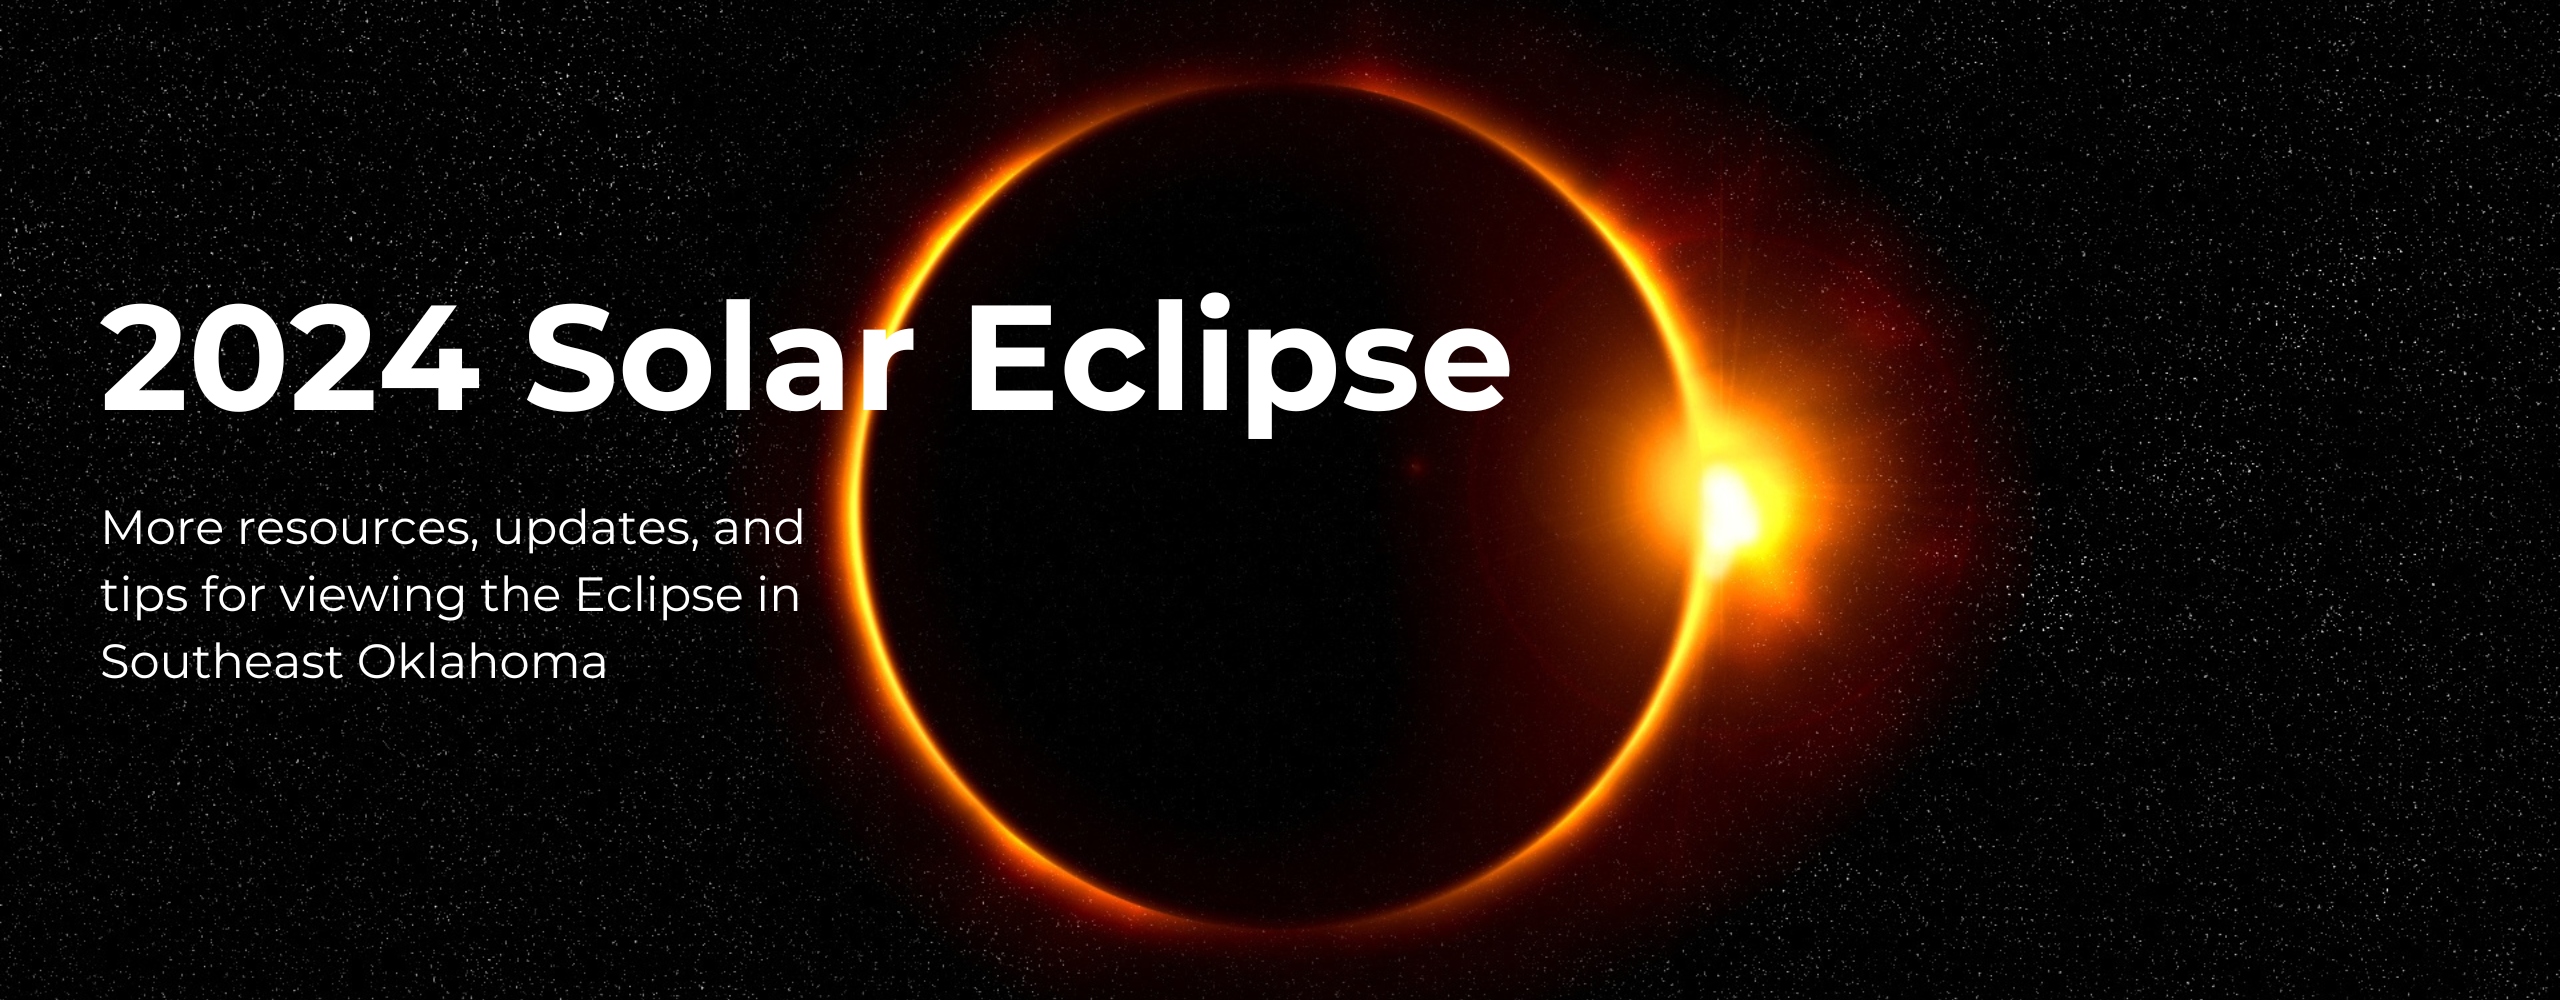 Copy of Black Orange Solar Eclipse Astrology Channel Youtube Banner - 1